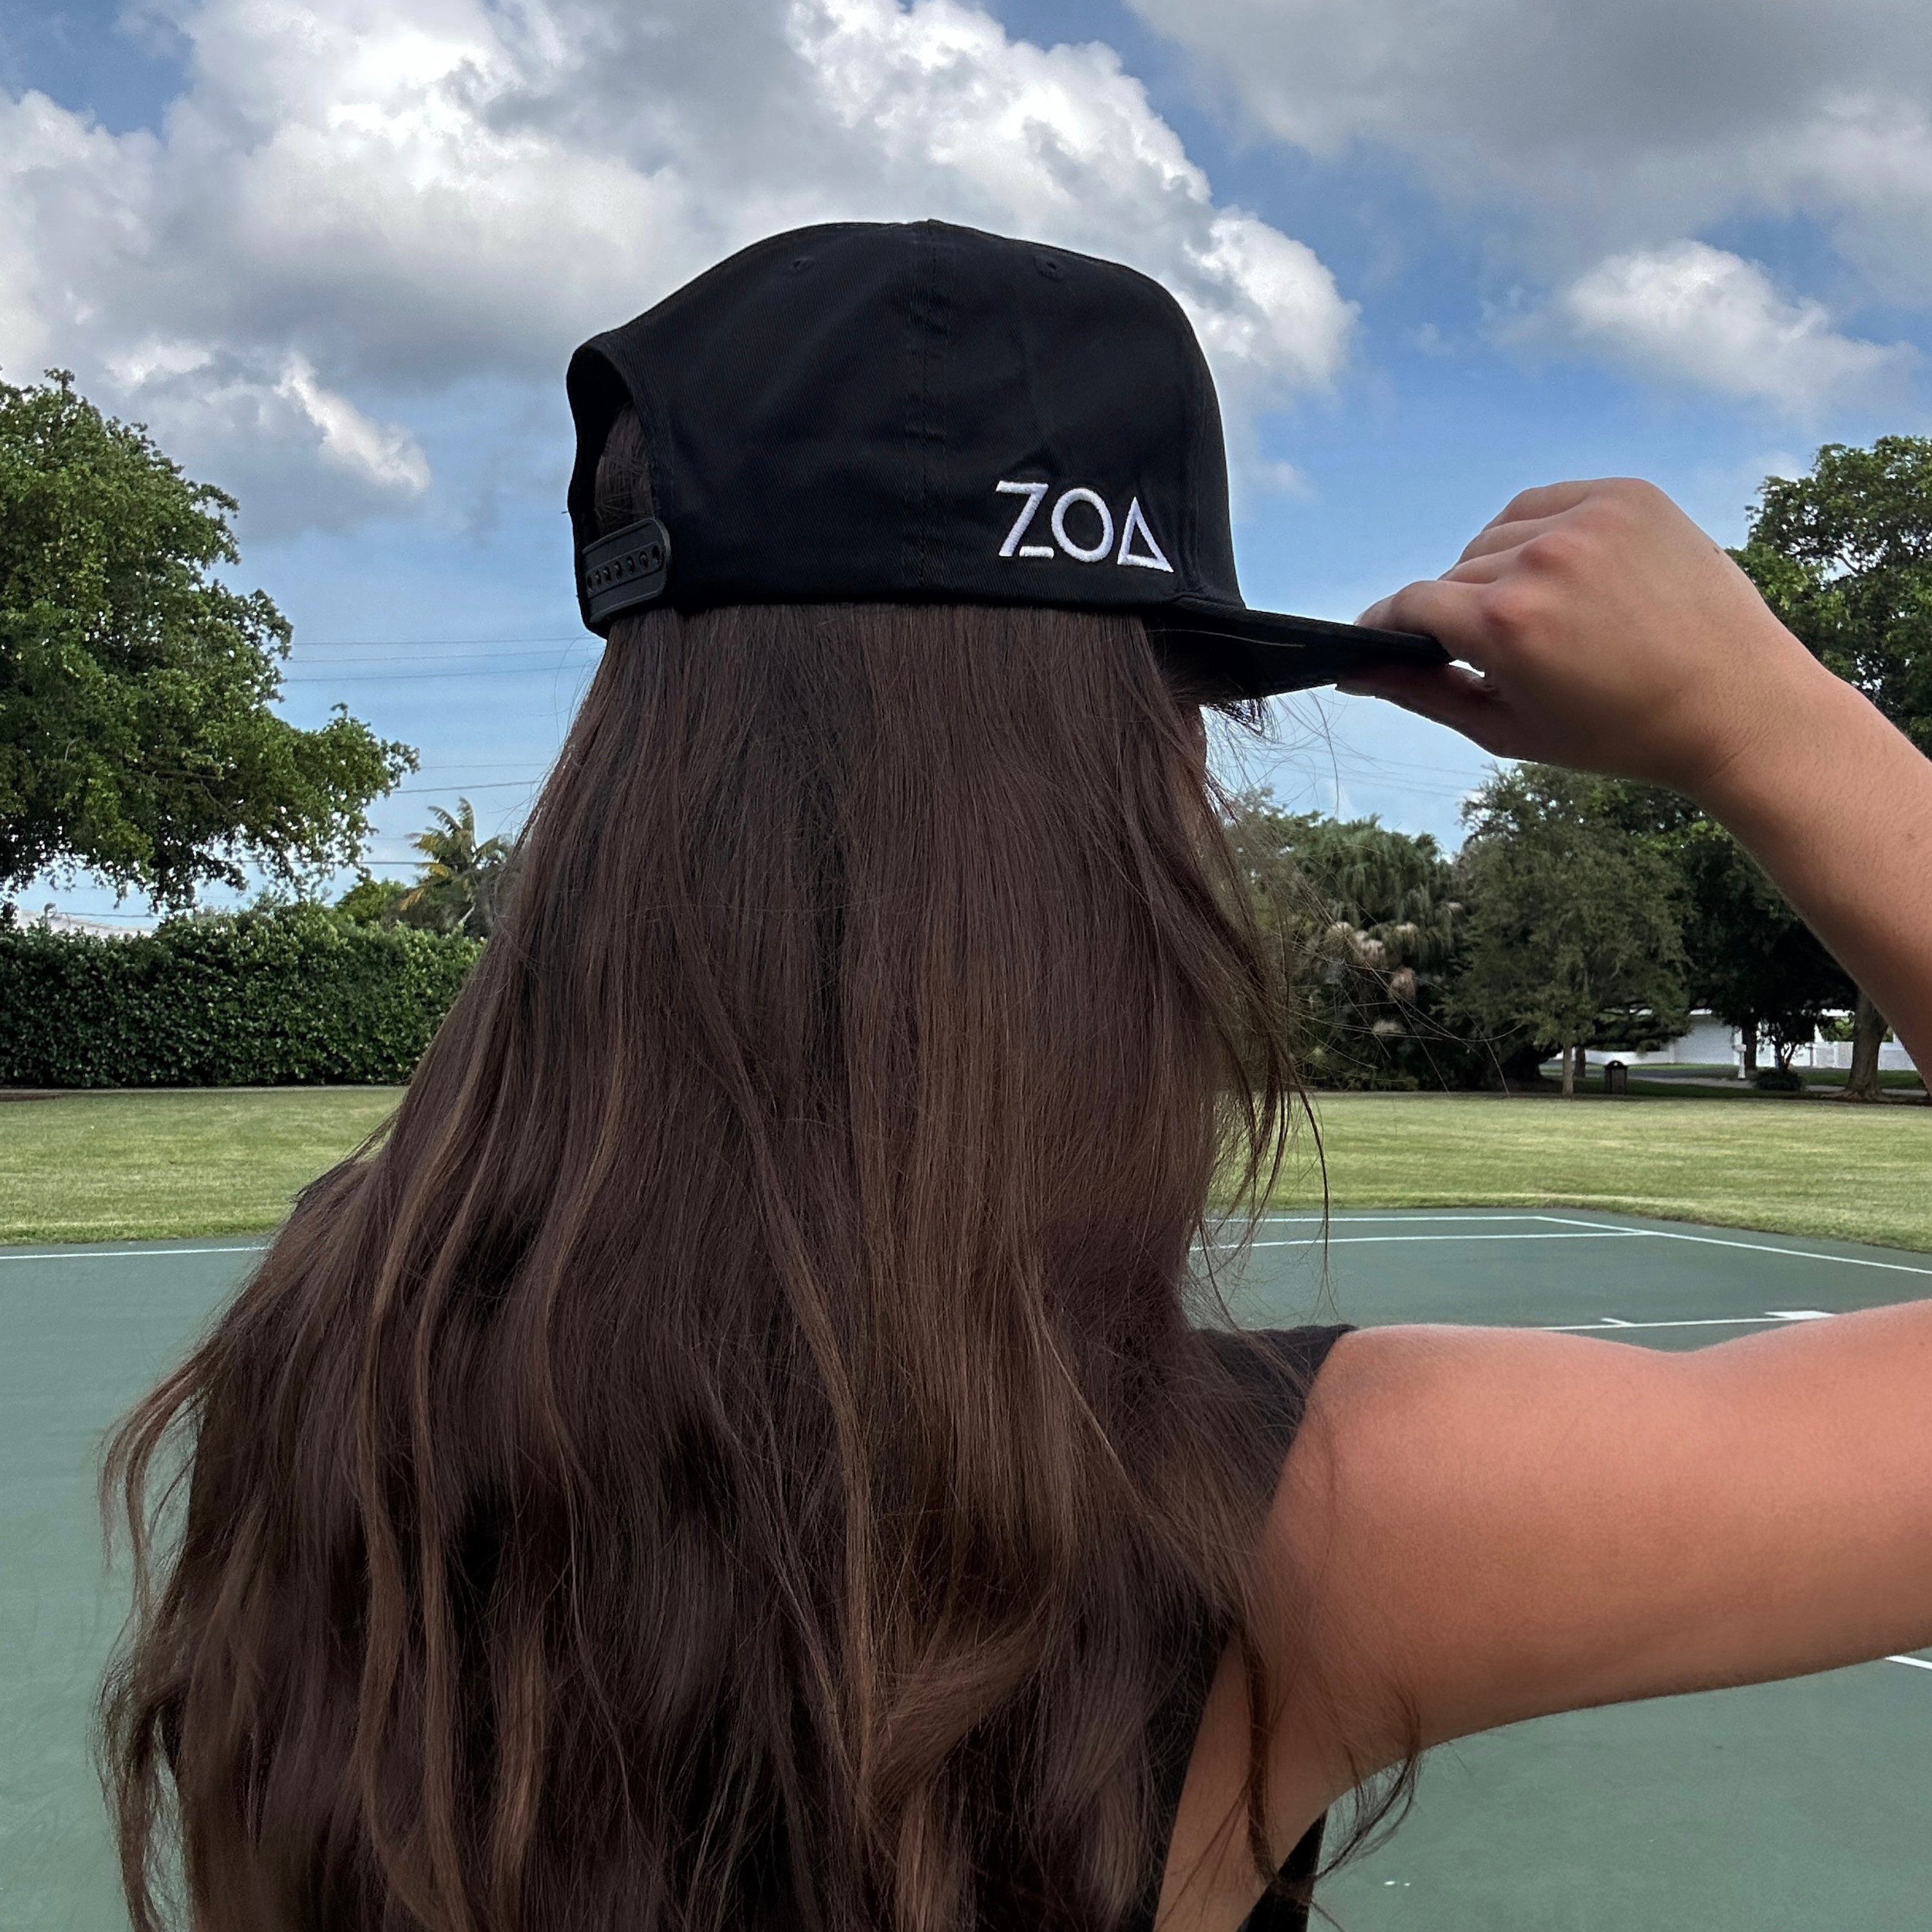 ZOA Mask Hat Blue Snapback